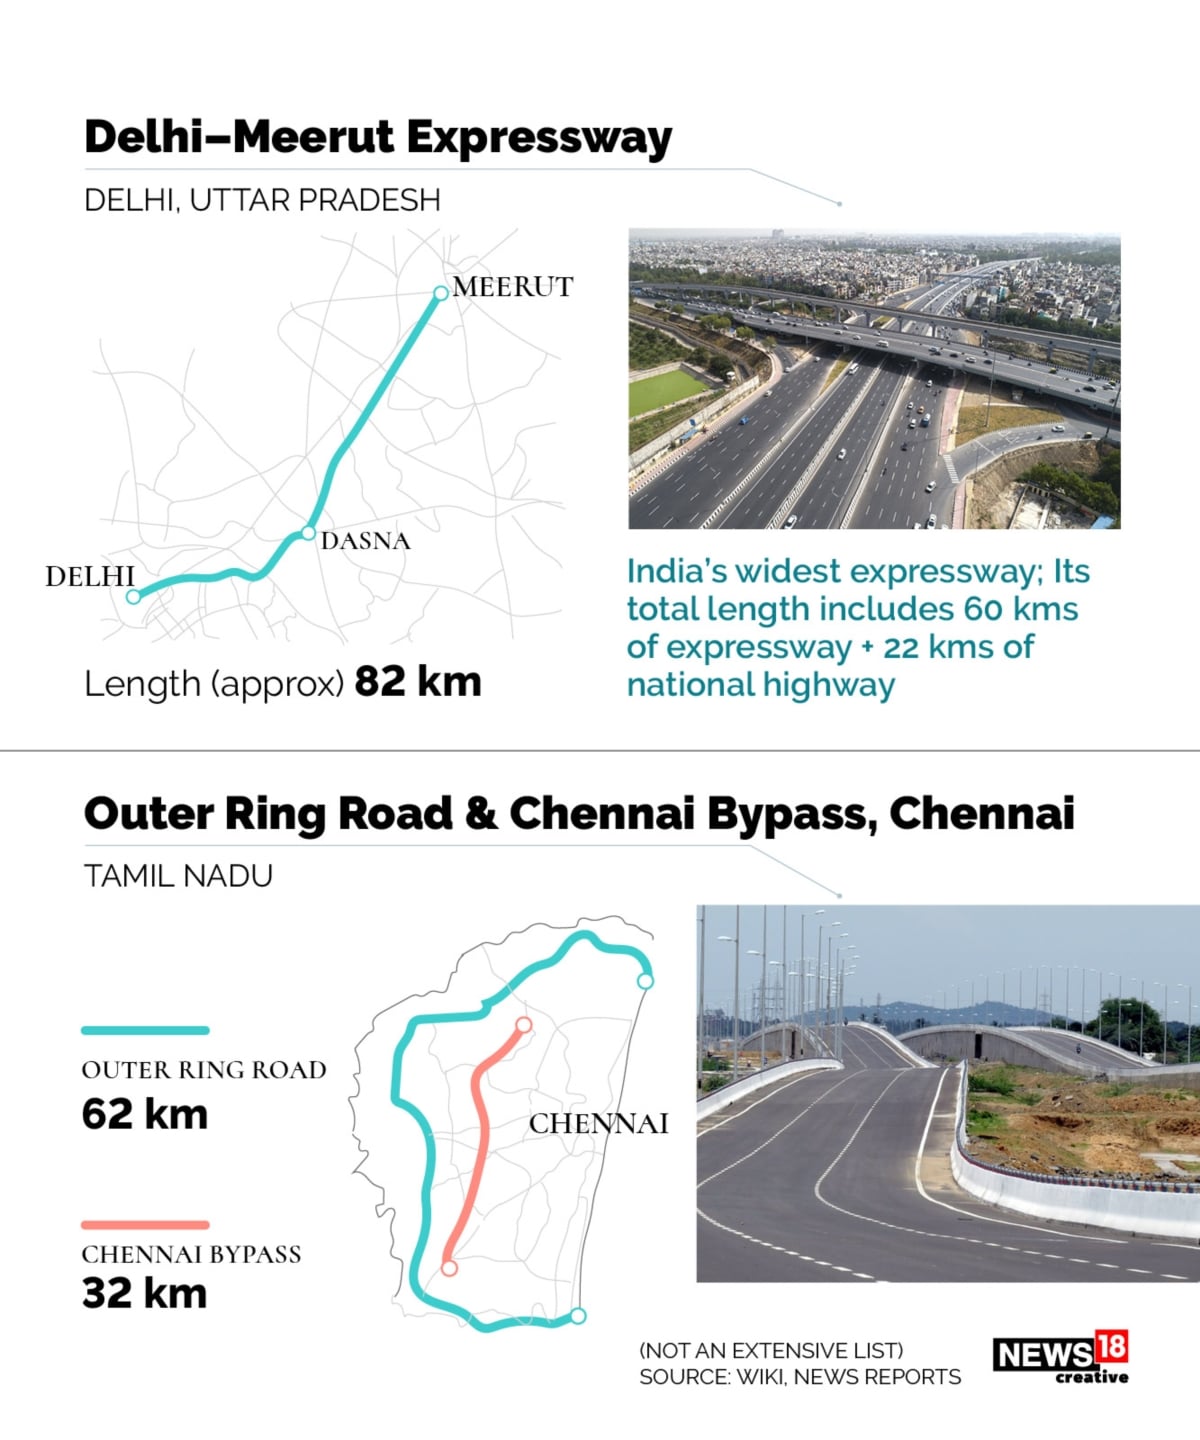 Meerut News: मेरठ में इस जगह आकार लेगी इनर रिंग रोड, कवायद शुरू - Meerut  News Inner Ring Road will take shape at this place in Meerut